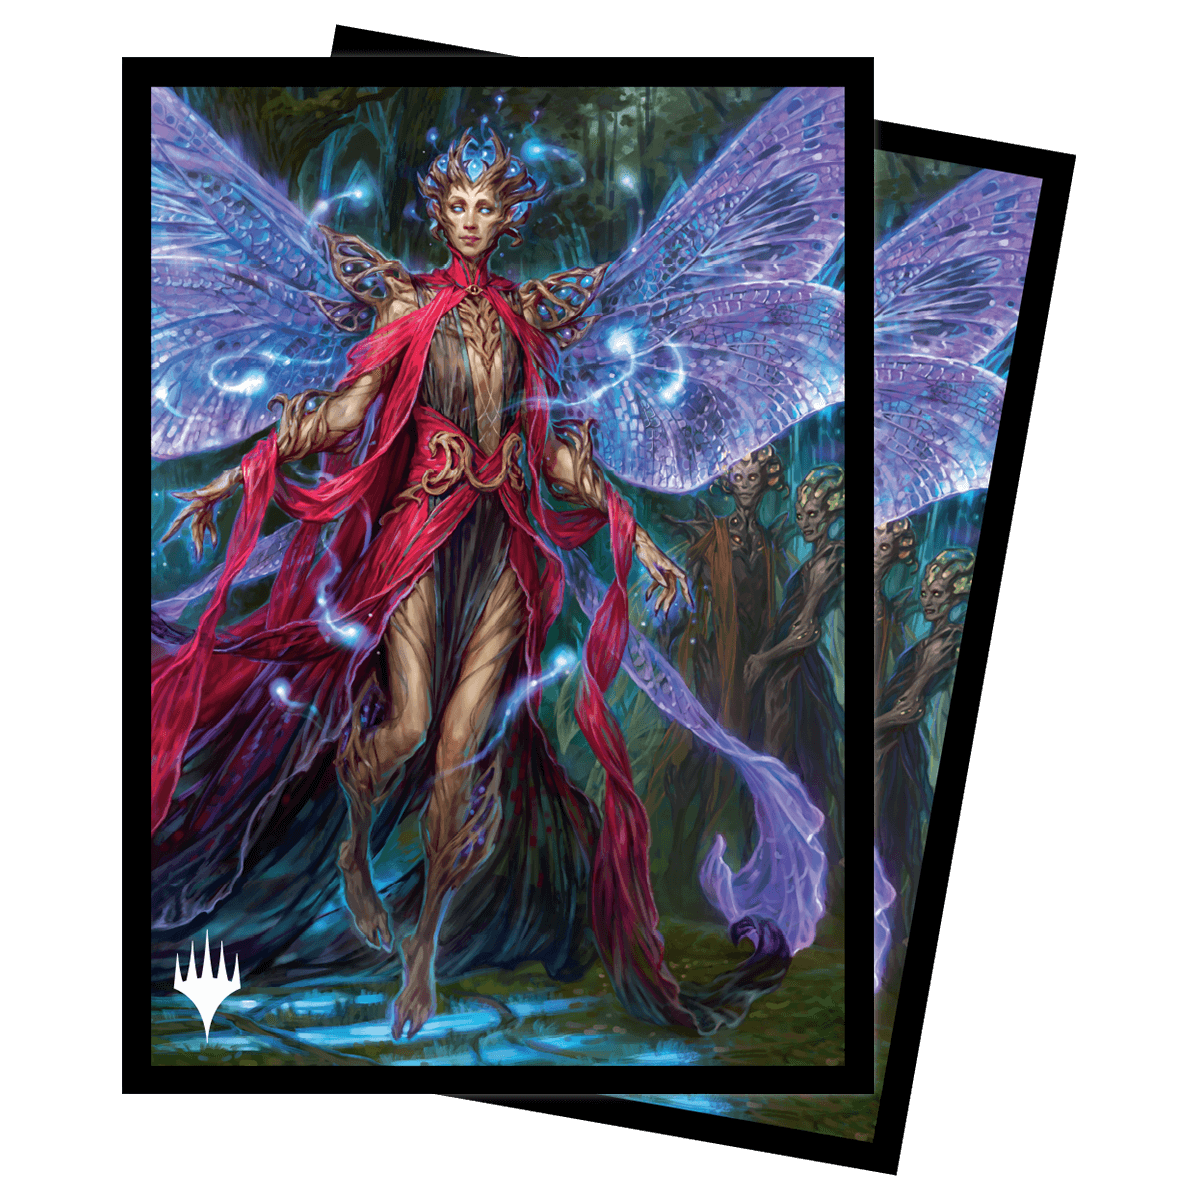 Wilds of Eldraine Tegwyll, Duke of Splendor Standard Deck Protector Sleeves (100ct) for Magic: The Gathering | Ultra PRO International